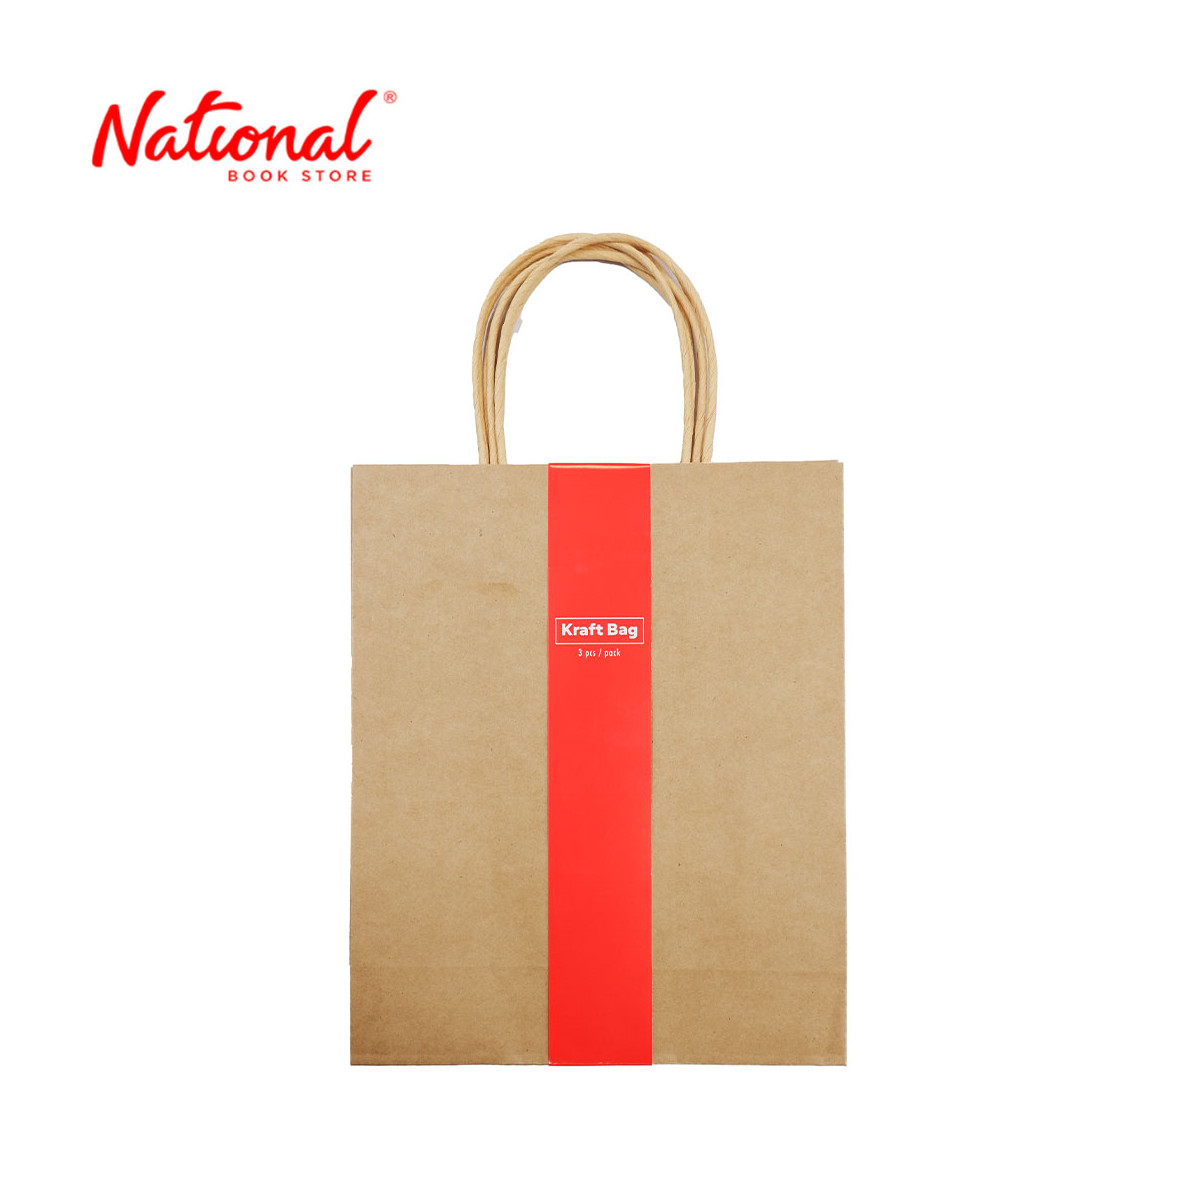 Best Buy Plain Kraft Gift Bag 3's Medium 23x9x28cm - Gifts & Occasion Supplies